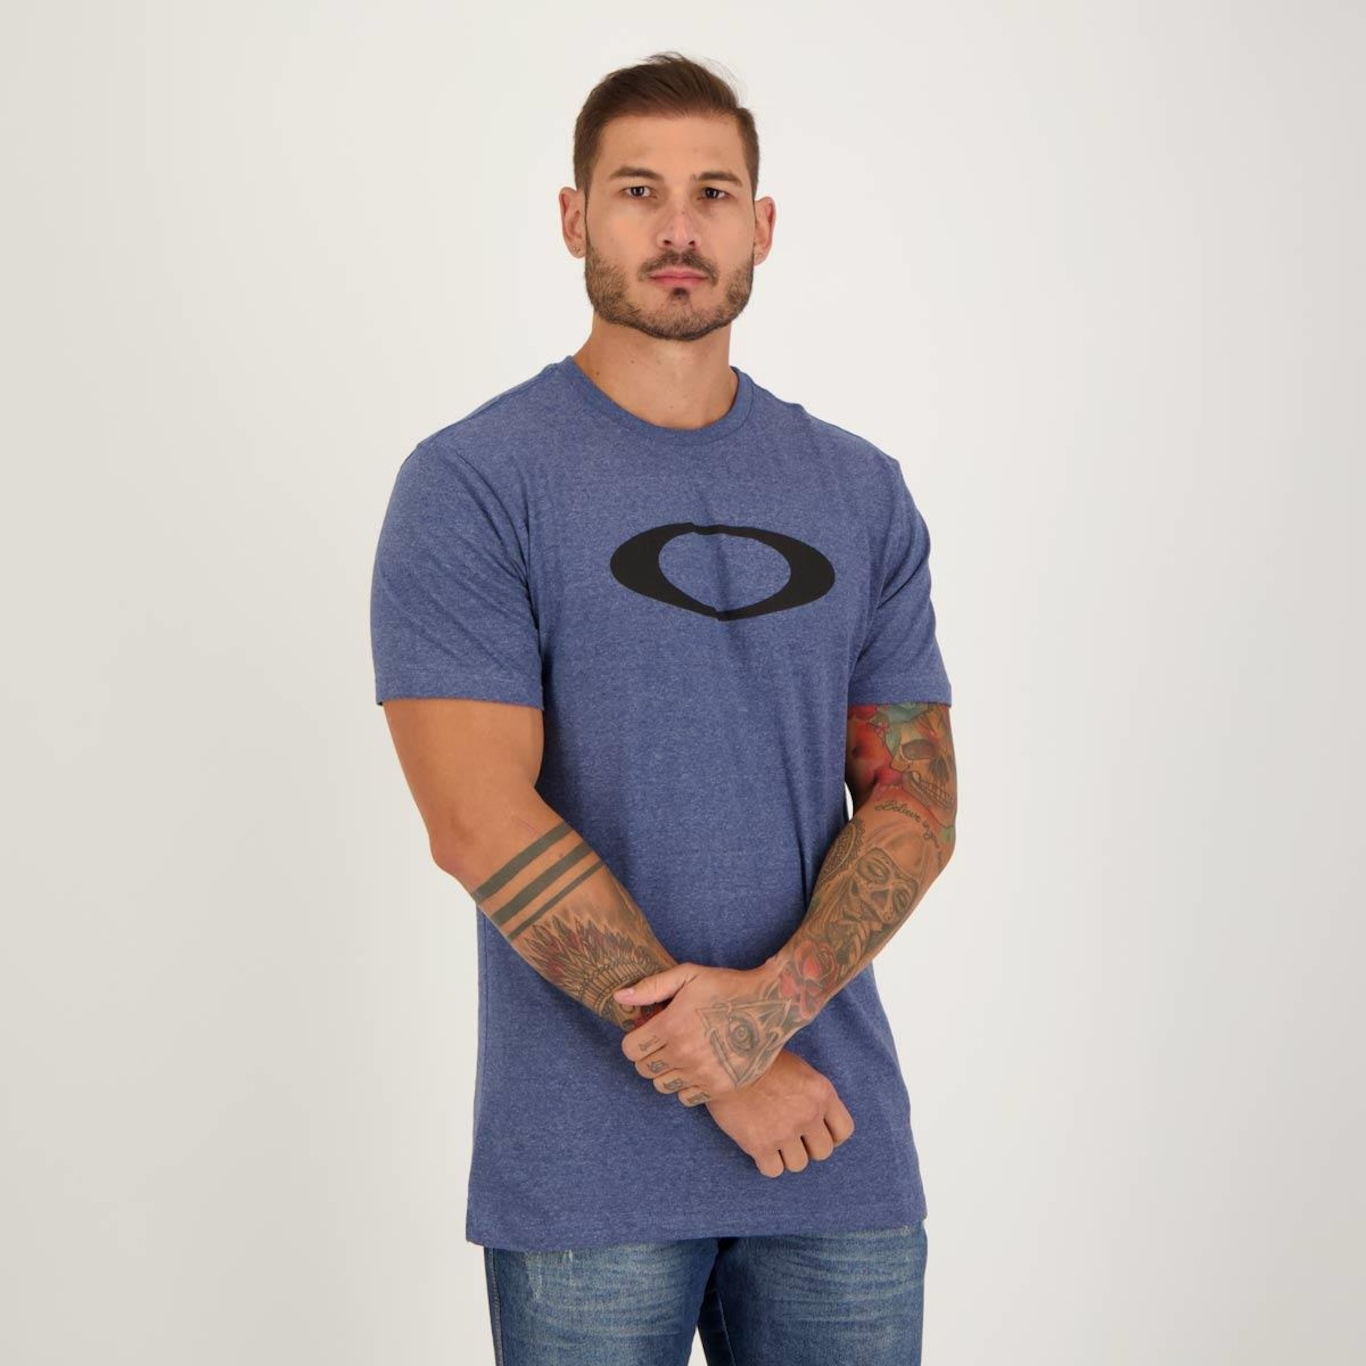 Roupas de Marcas  Camisetas, Camisas, Bermudas, Calças. - Camiseta Oakley  (P)